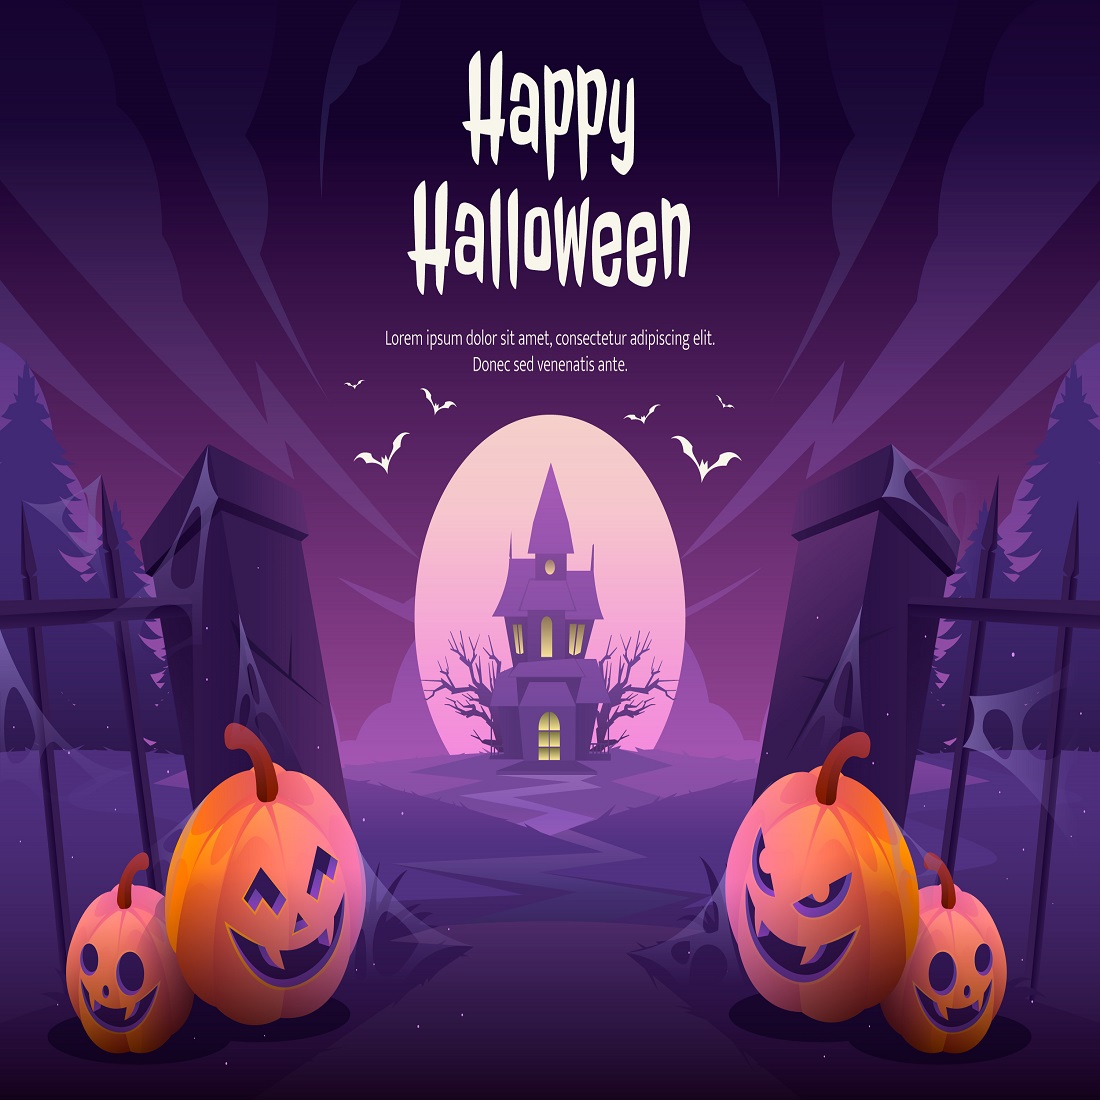 Gradient Halloween background cover image.